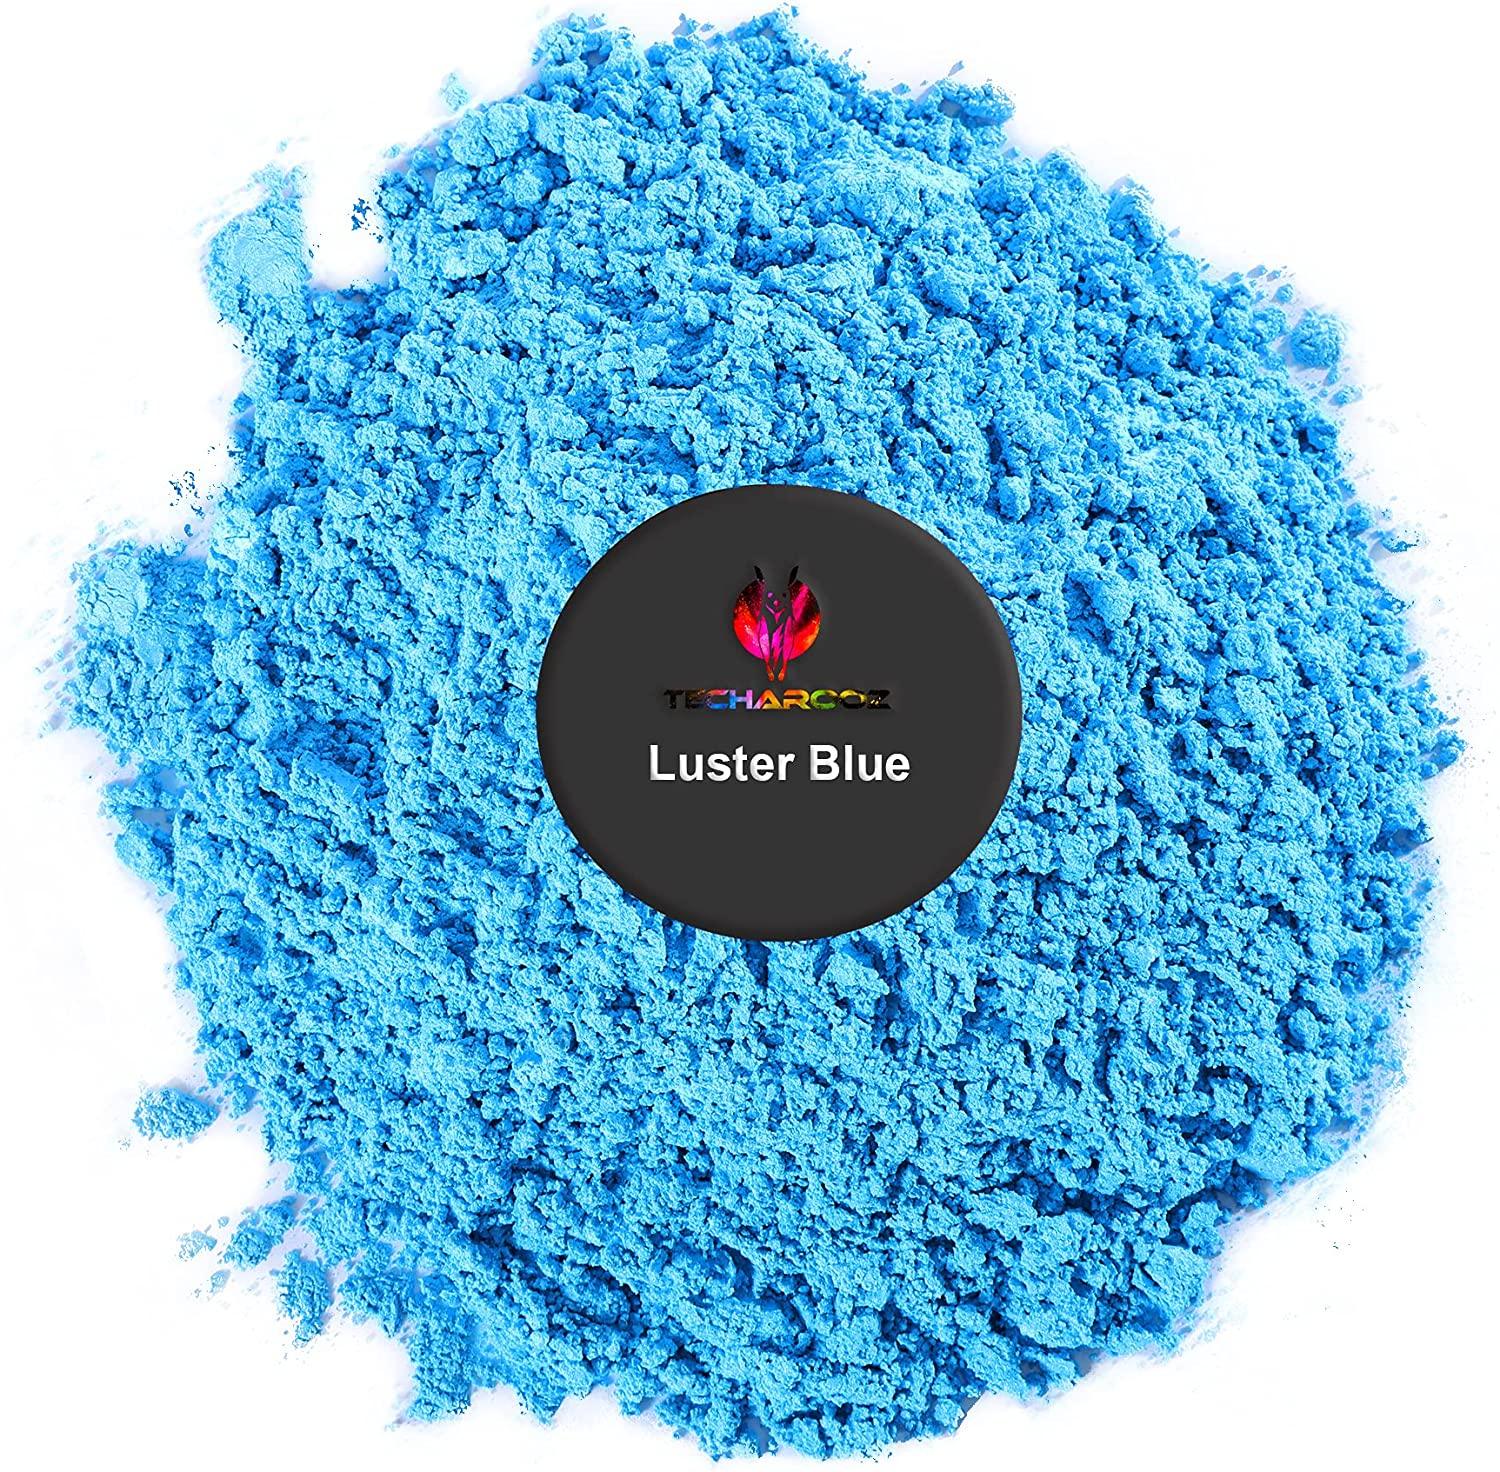 Ice Blue Mica Powder for Epoxy Resin 56g / 2oz. Jar - 2 Tone Resin Dye